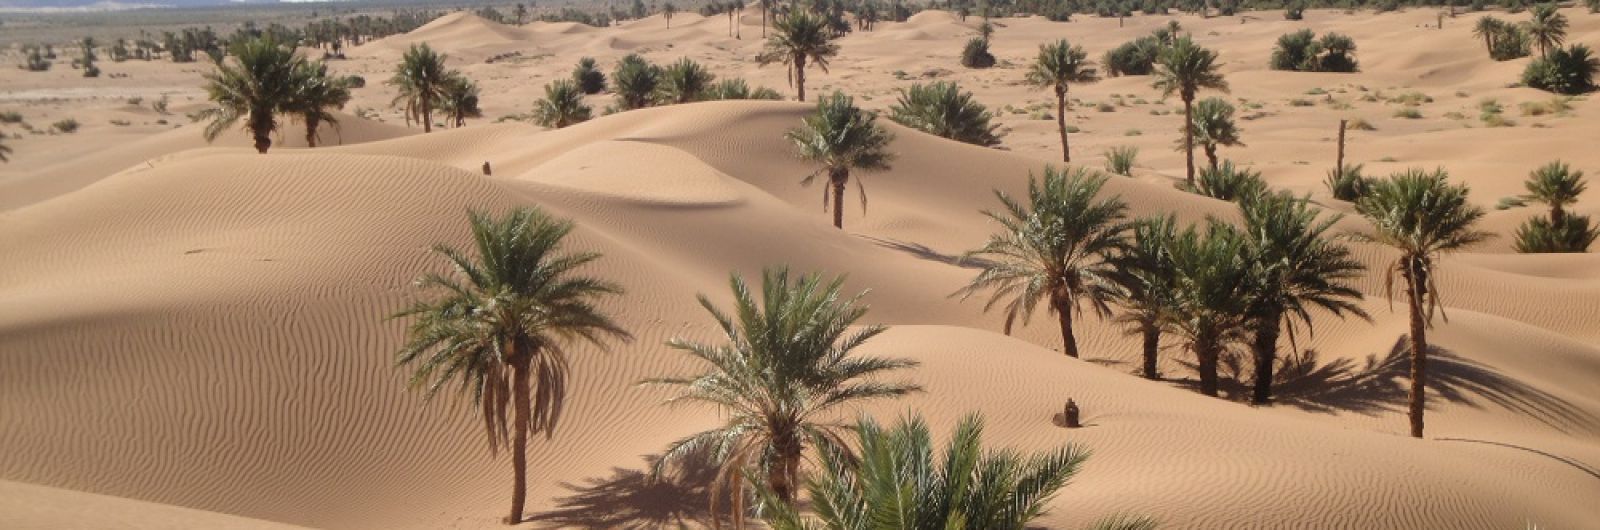 marruecos dunas0